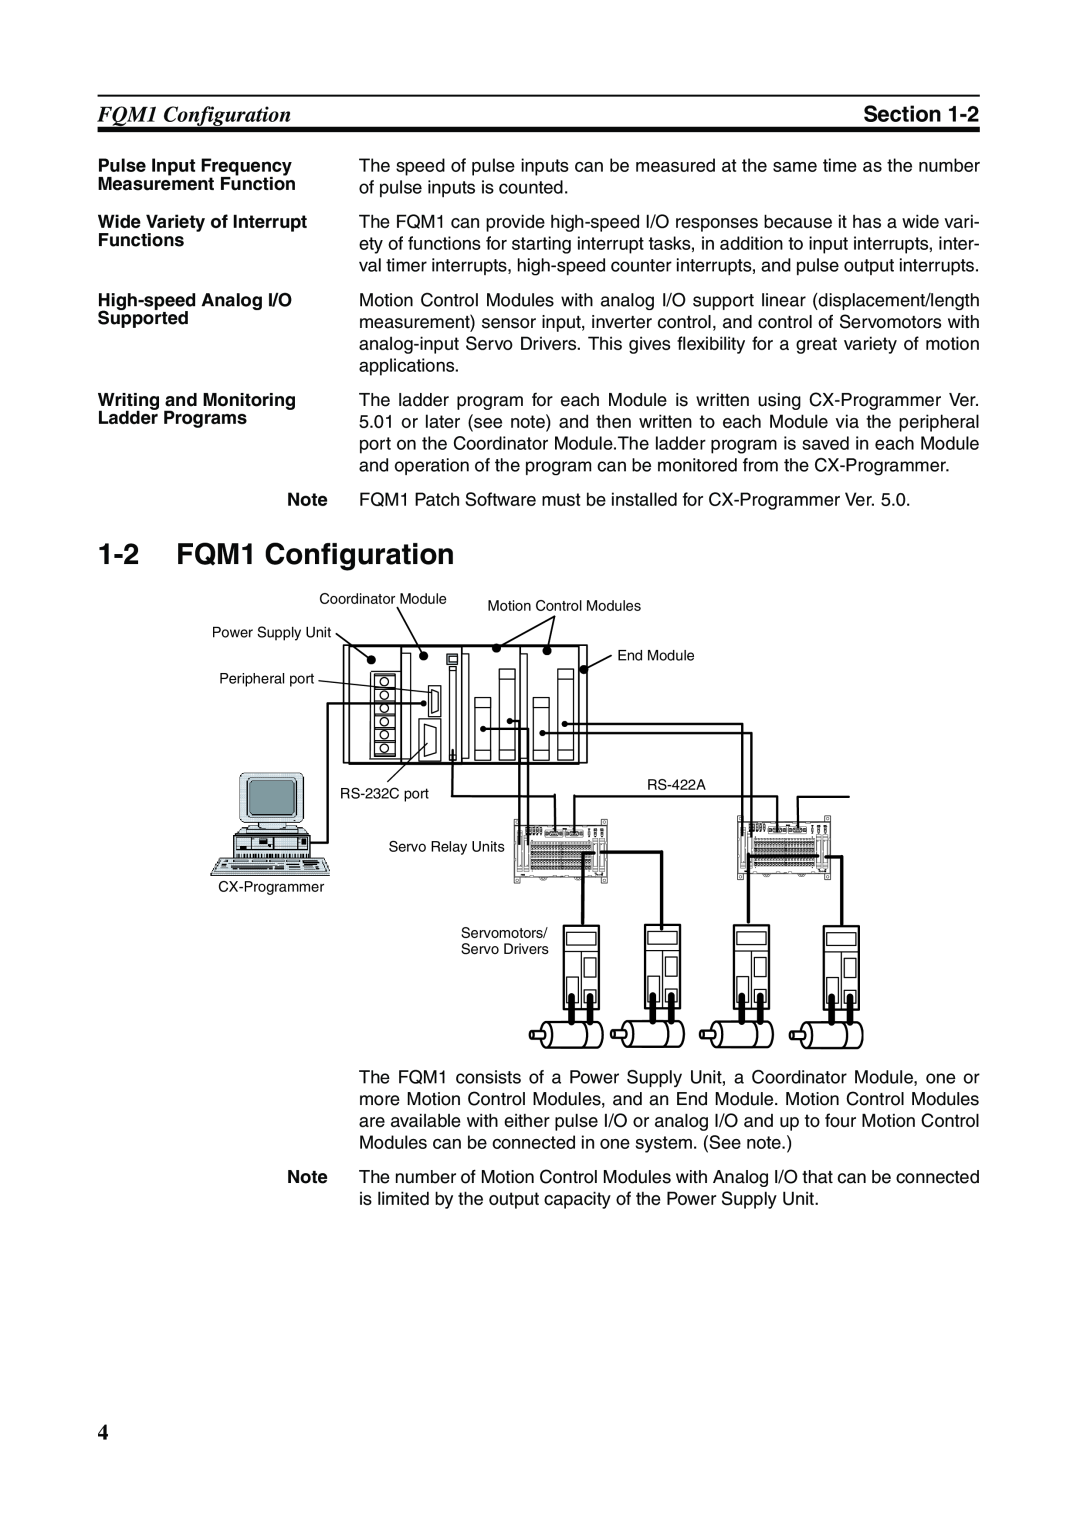 Omron FQM1-CM001, FQM1-MMA21, FQM1-MMP21 1-2FQM1 Configuration, Section, Pulse Input Frequency Measurement Function 